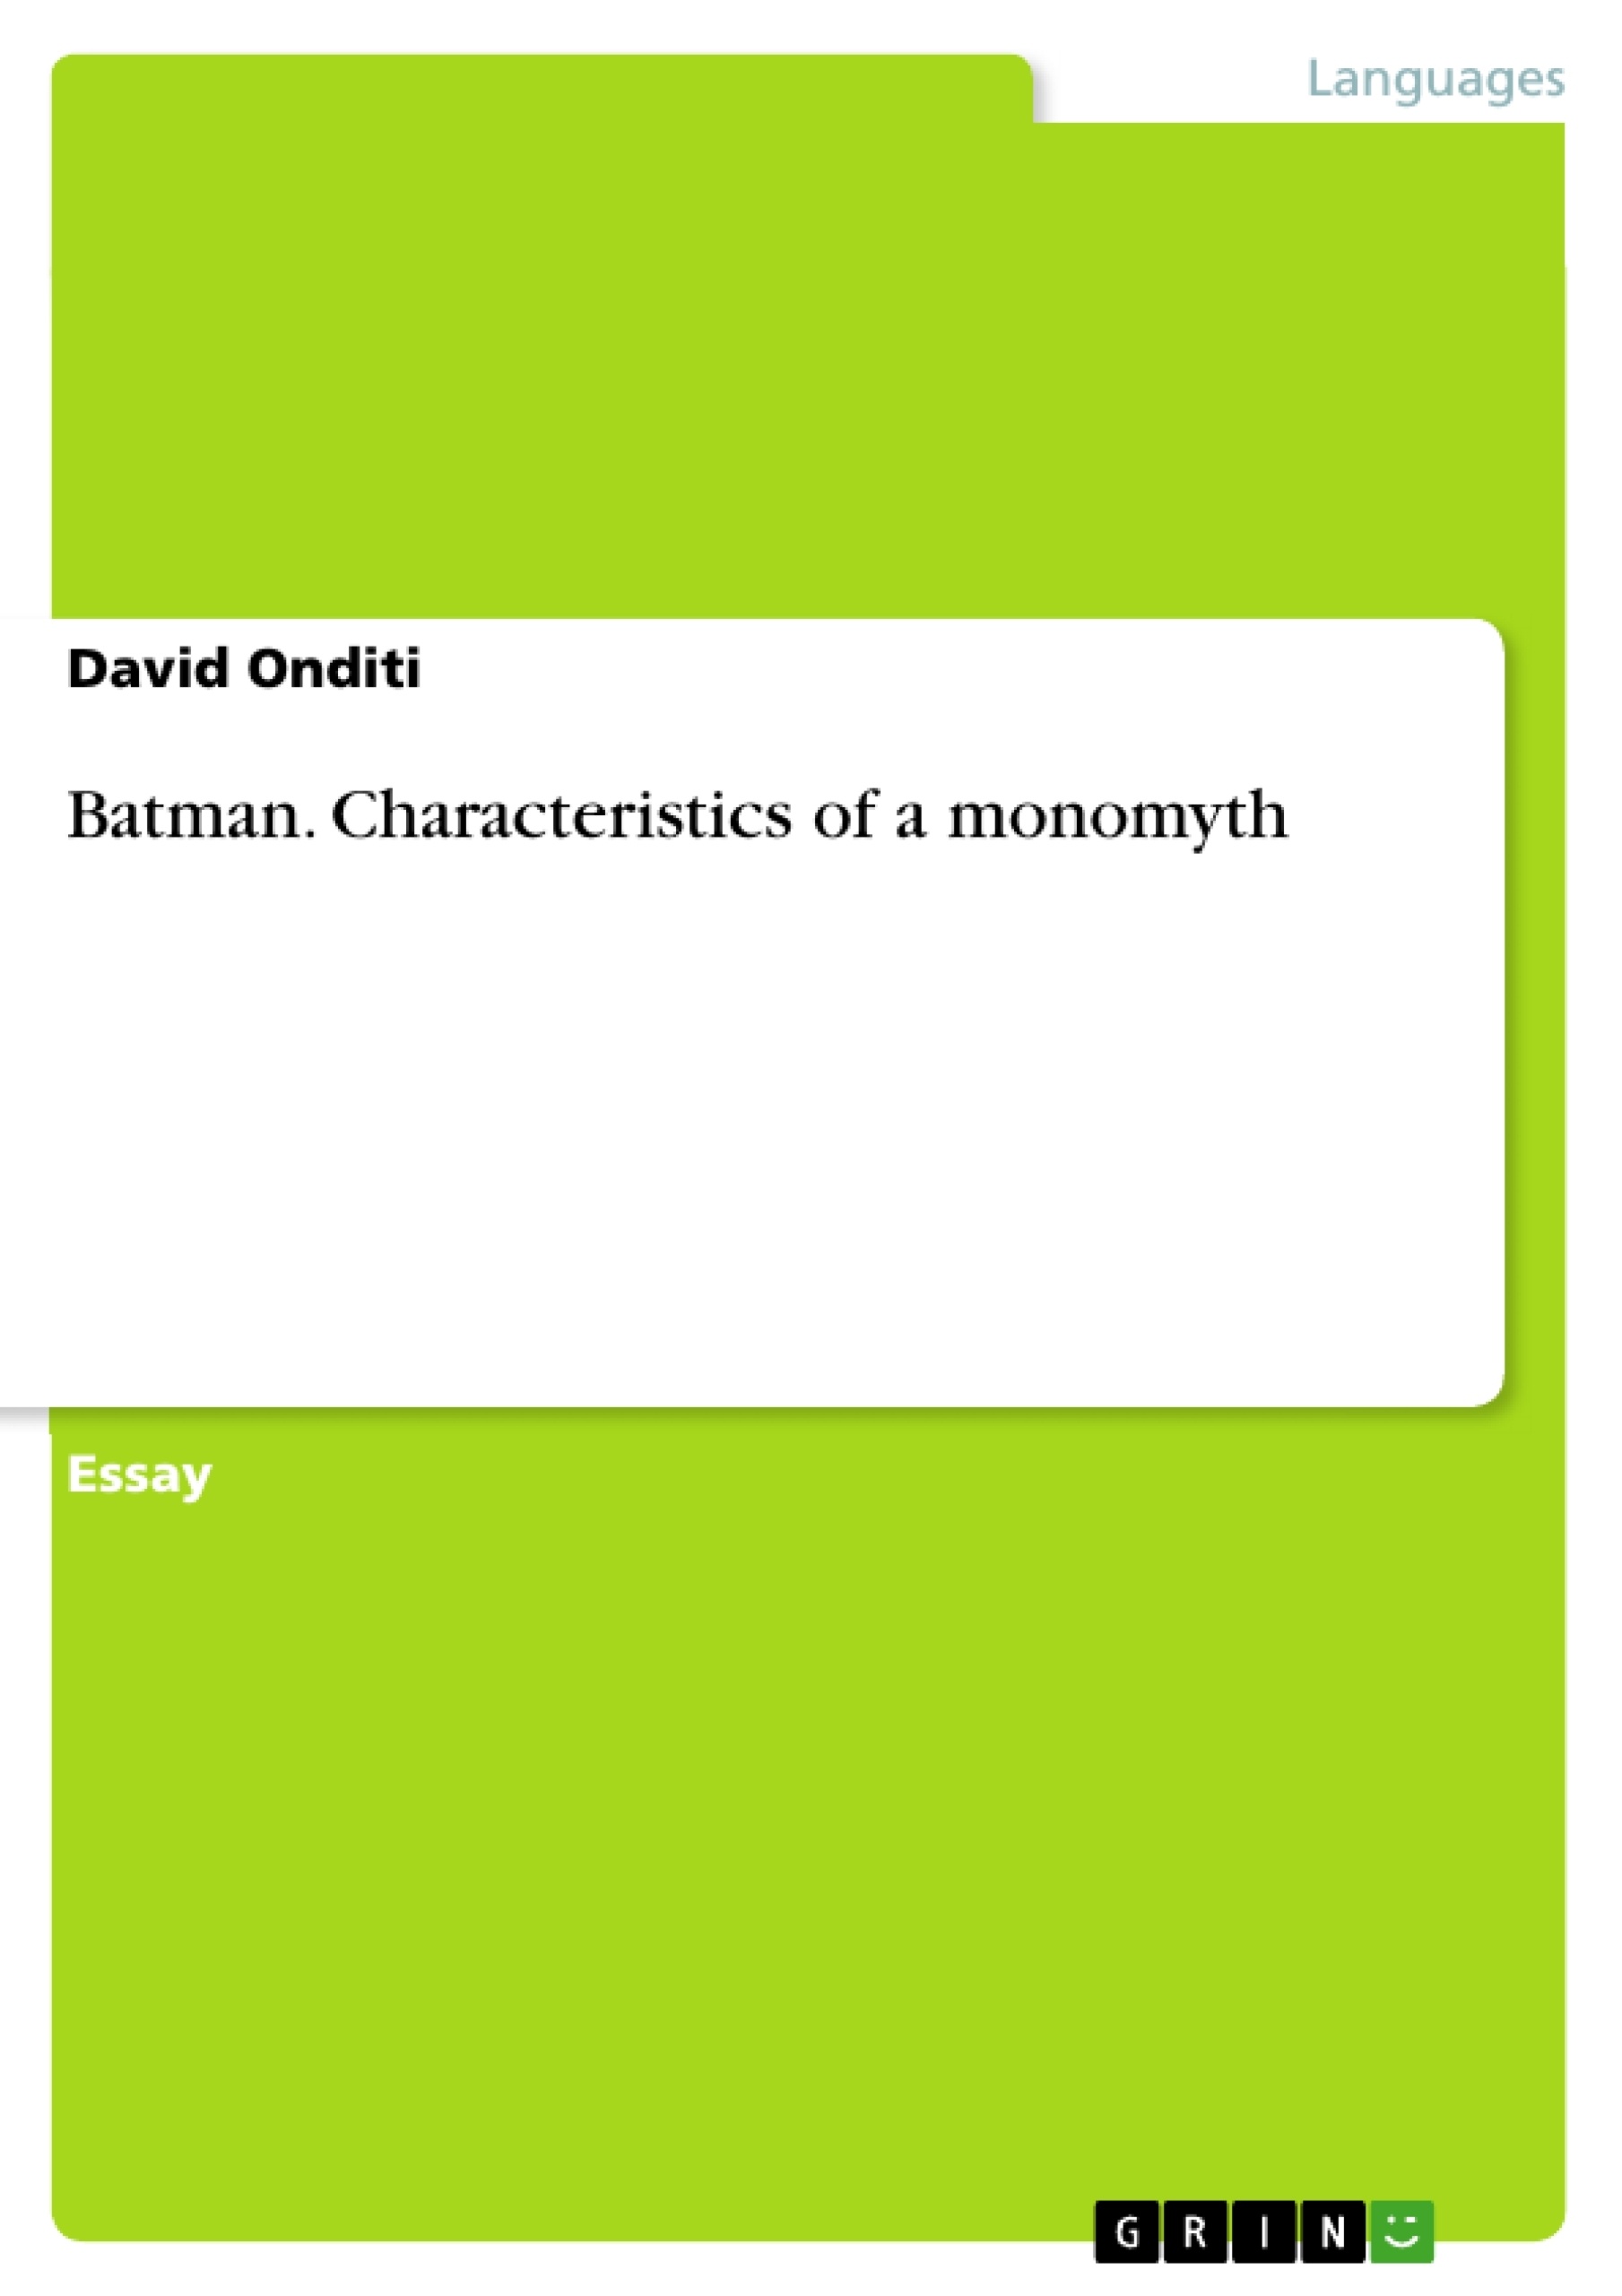 Title: Batman. Characteristics of a monomyth